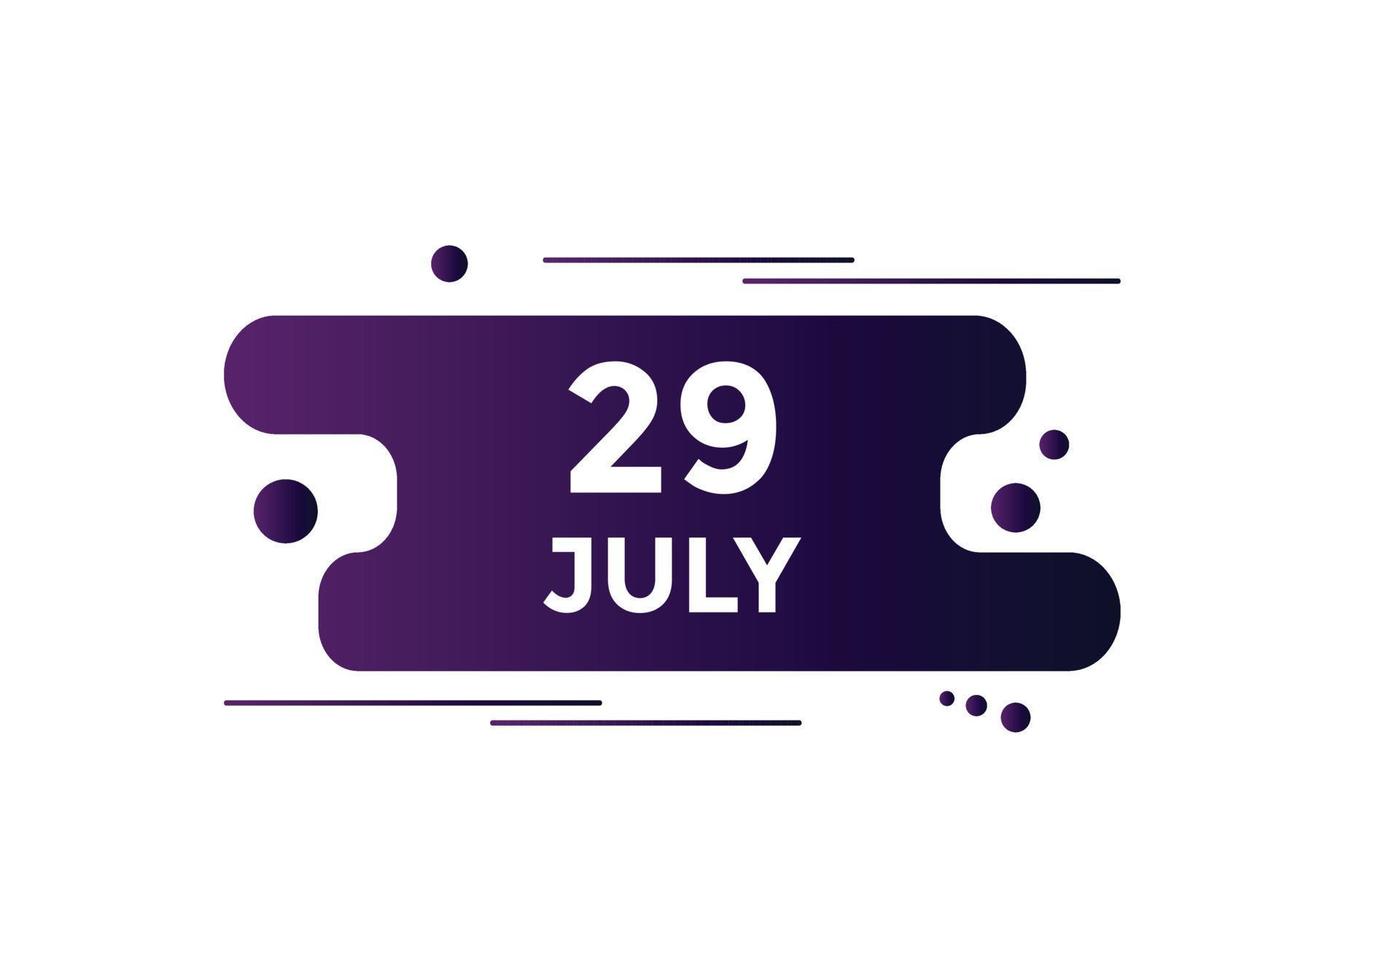 july 29 calendar reminder. 29th july daily calendar icon template. Calendar 29th july icon Design template. Vector illustration